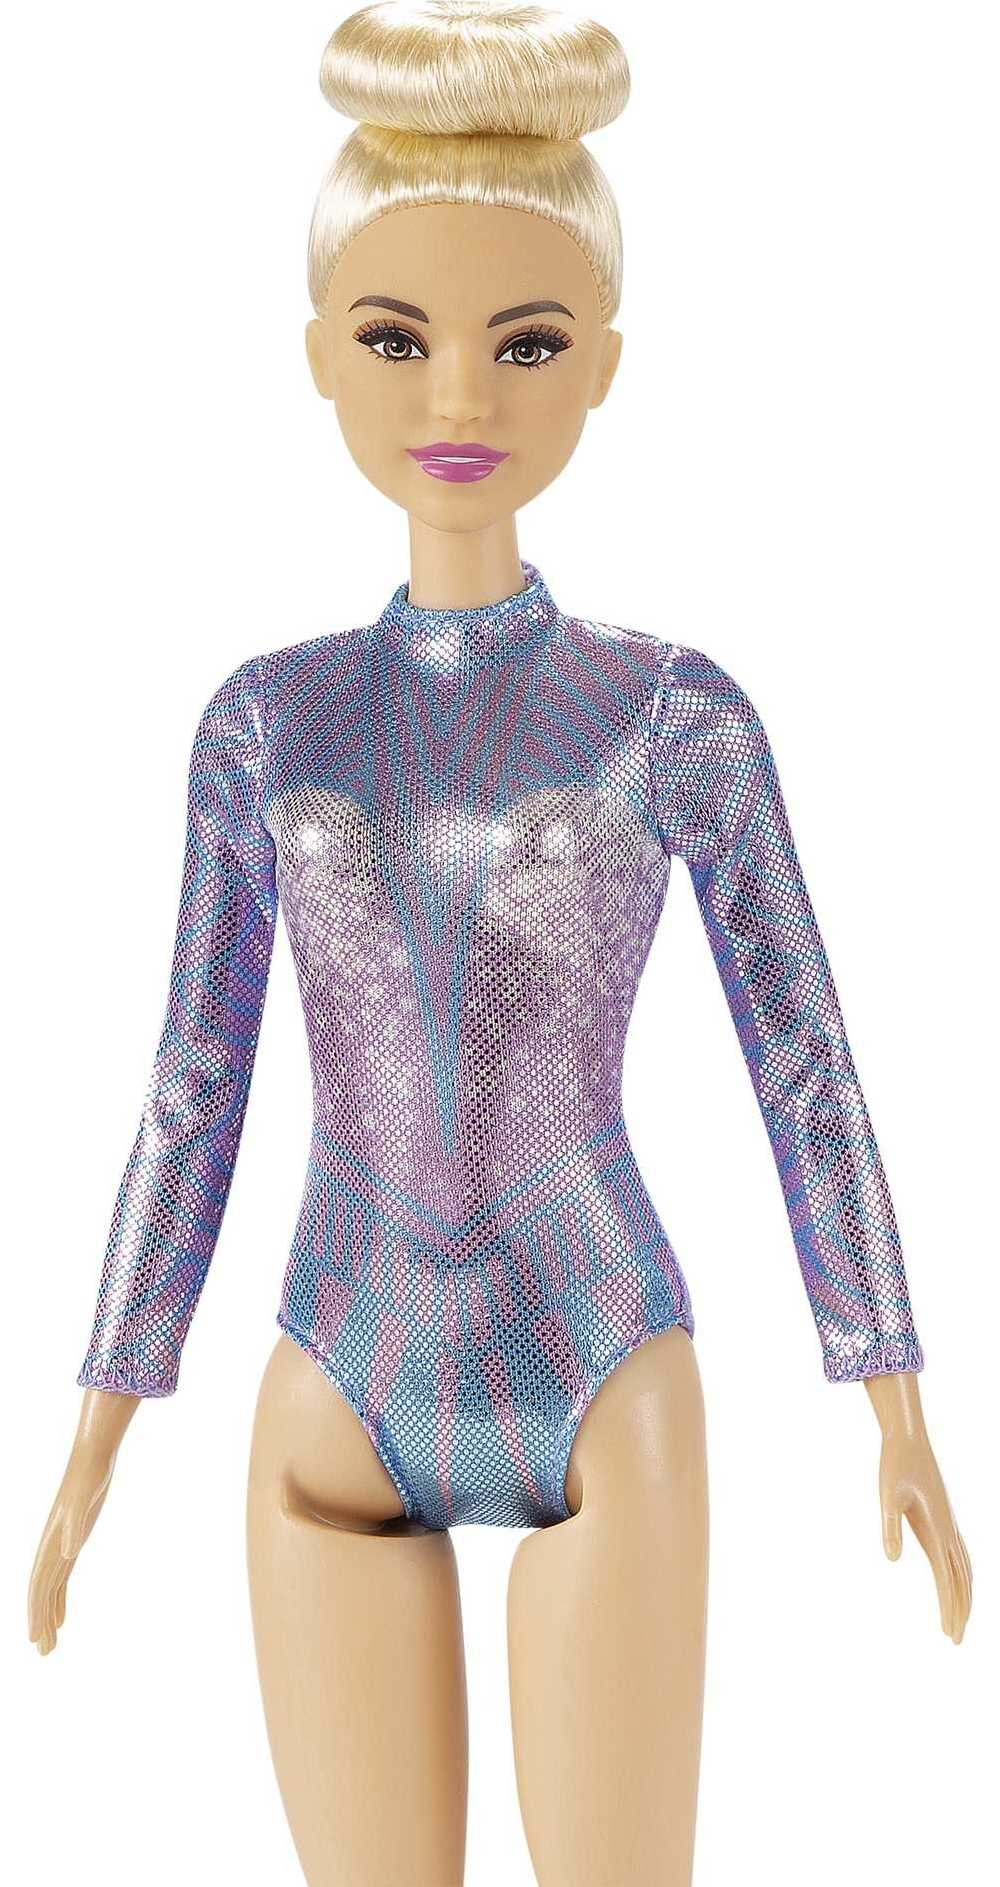 Barbie Rhythmic Gymnast Fashion Doll Dressed in Shimmery Leotard with Blonde Hair & Brown Eyes - image 2 of 6